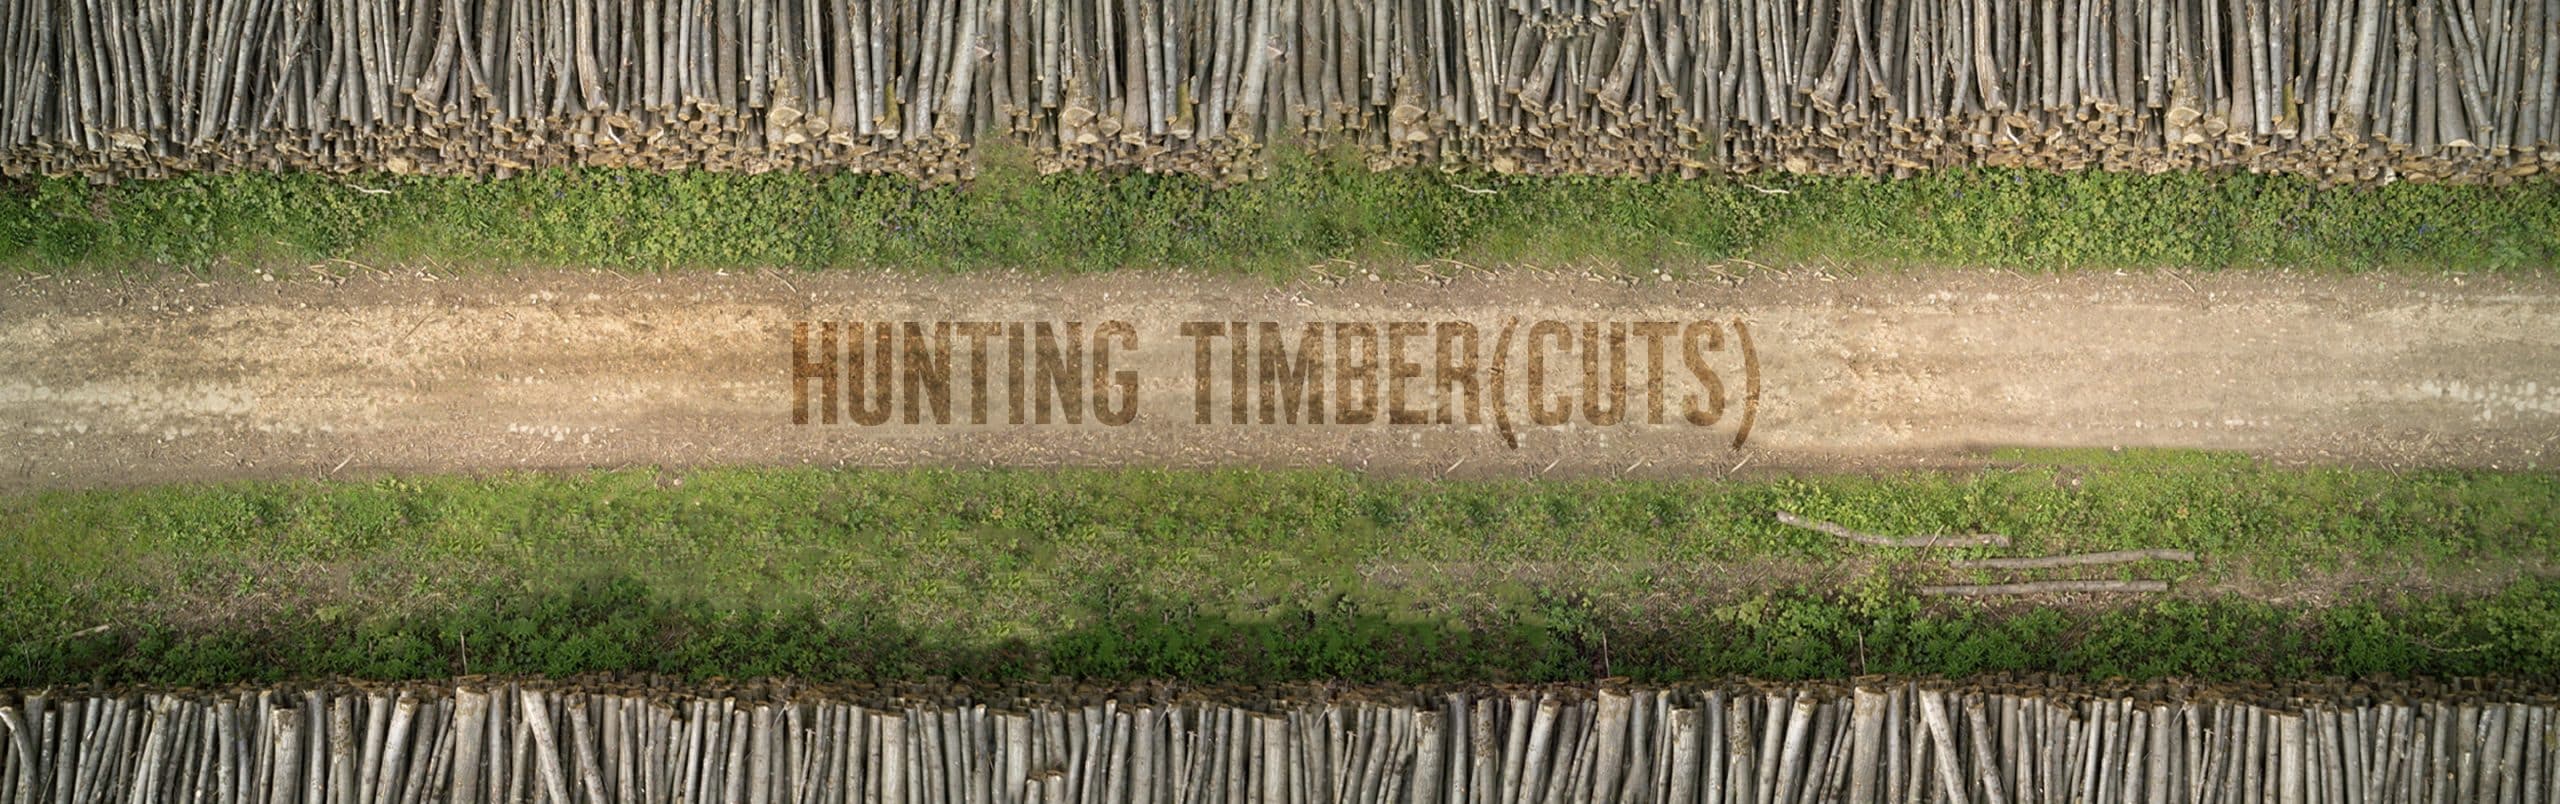 Hunting Timber Cuts